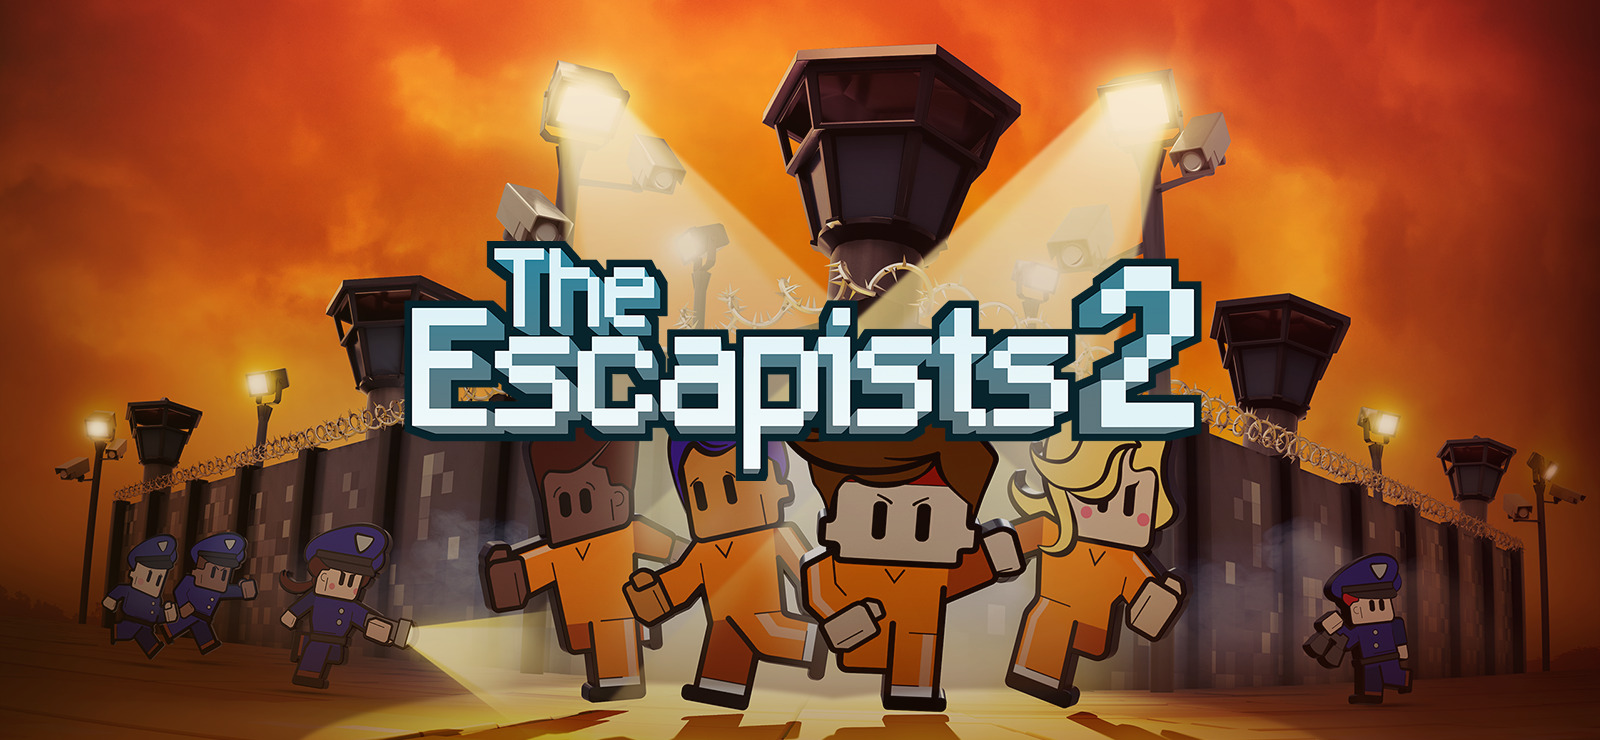 The Escapists: Prison Escape - Apps on Google Play